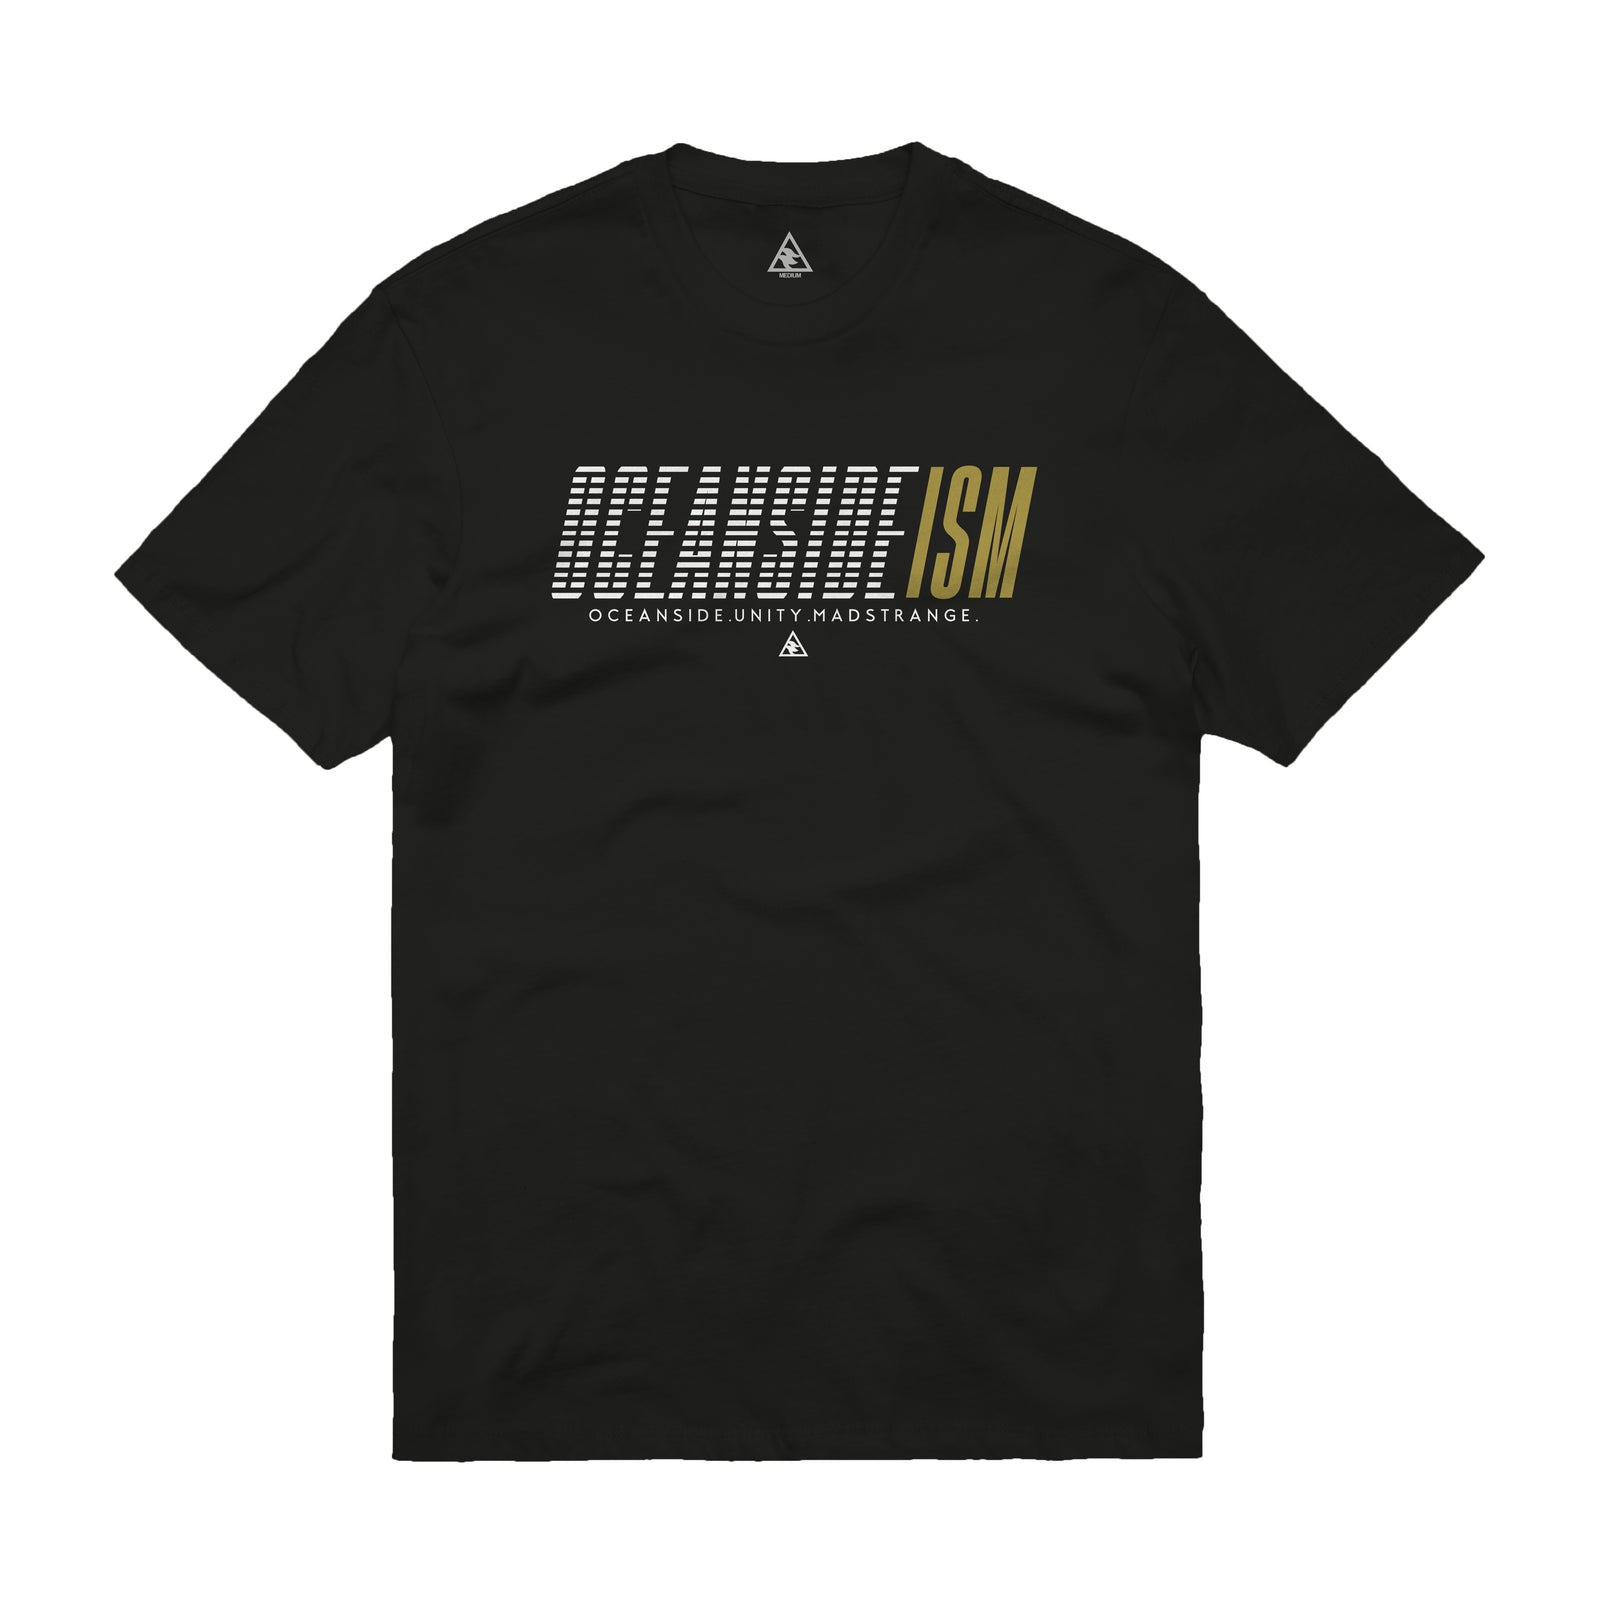 Oceansideism T-Shirt (Black)